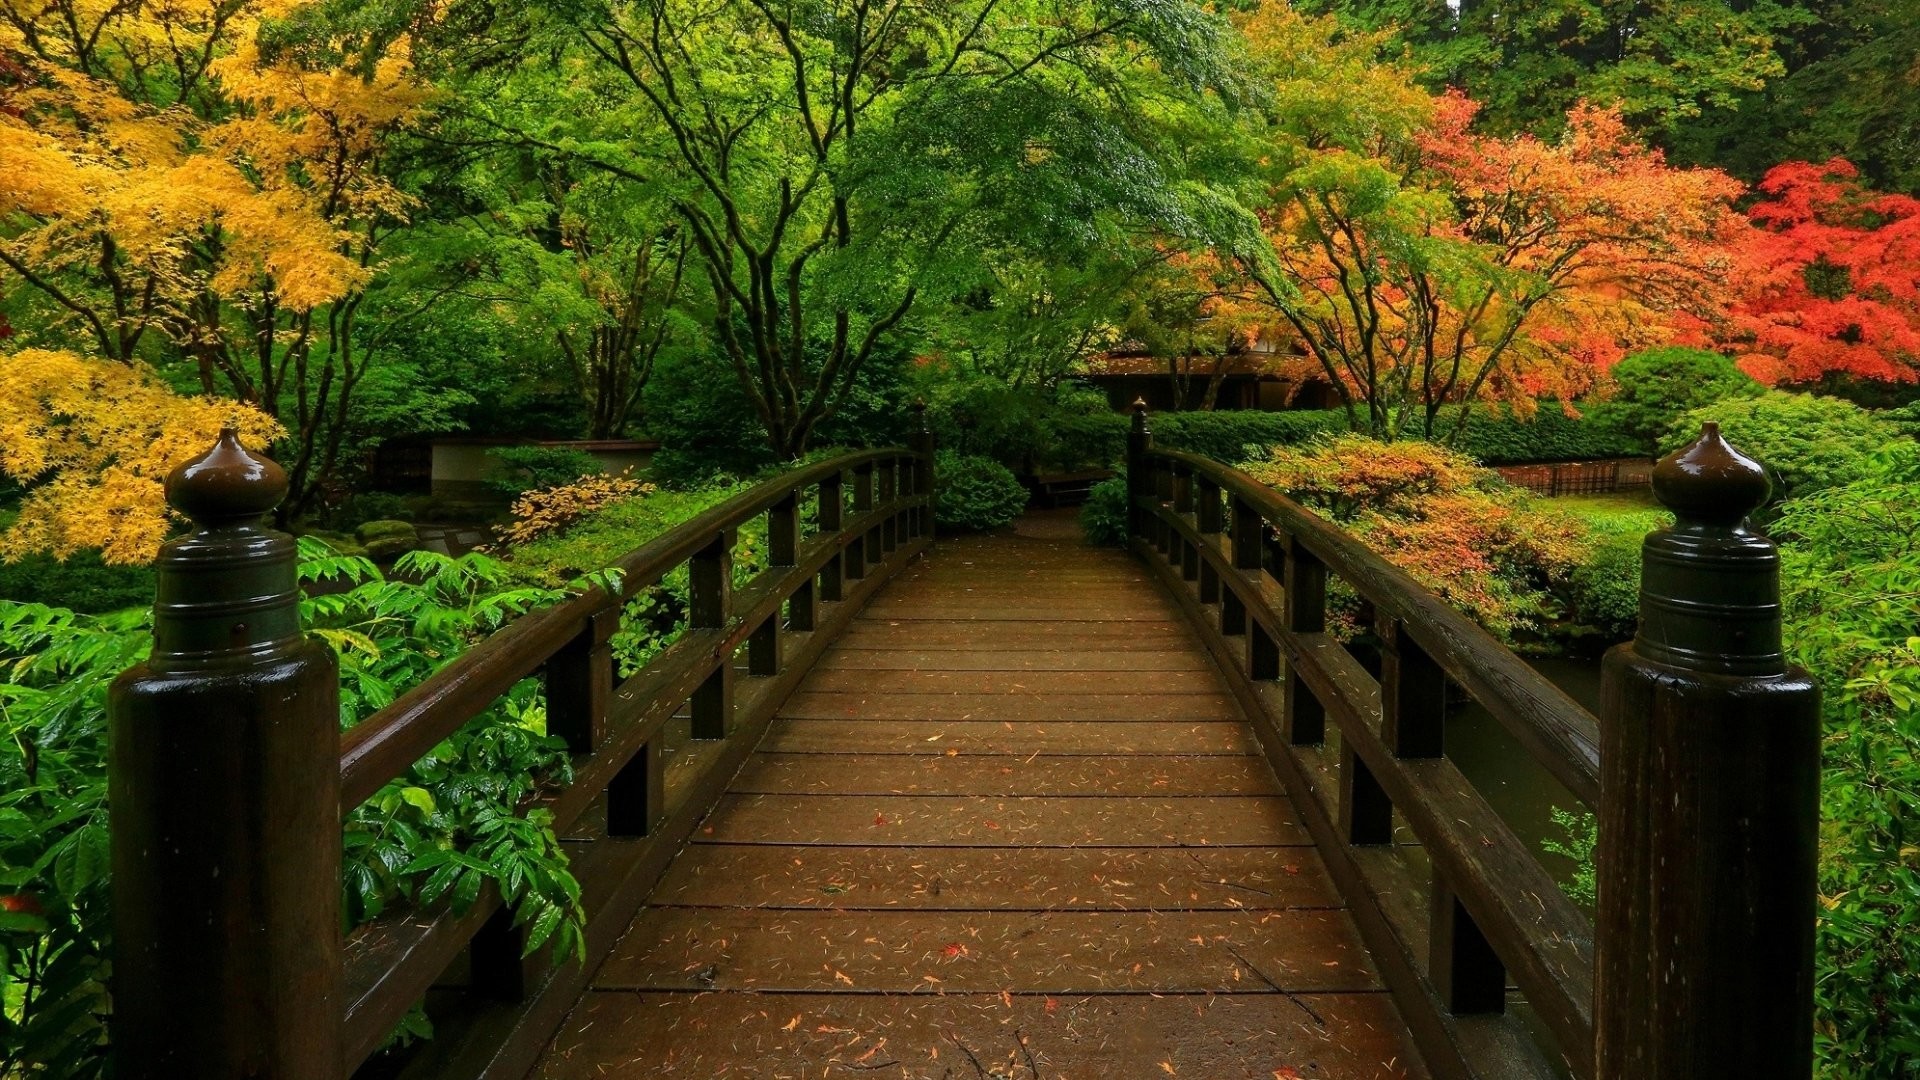 1920x1080 Man Made - Japanese Garden Bridge Fall Foliage Wallpaper